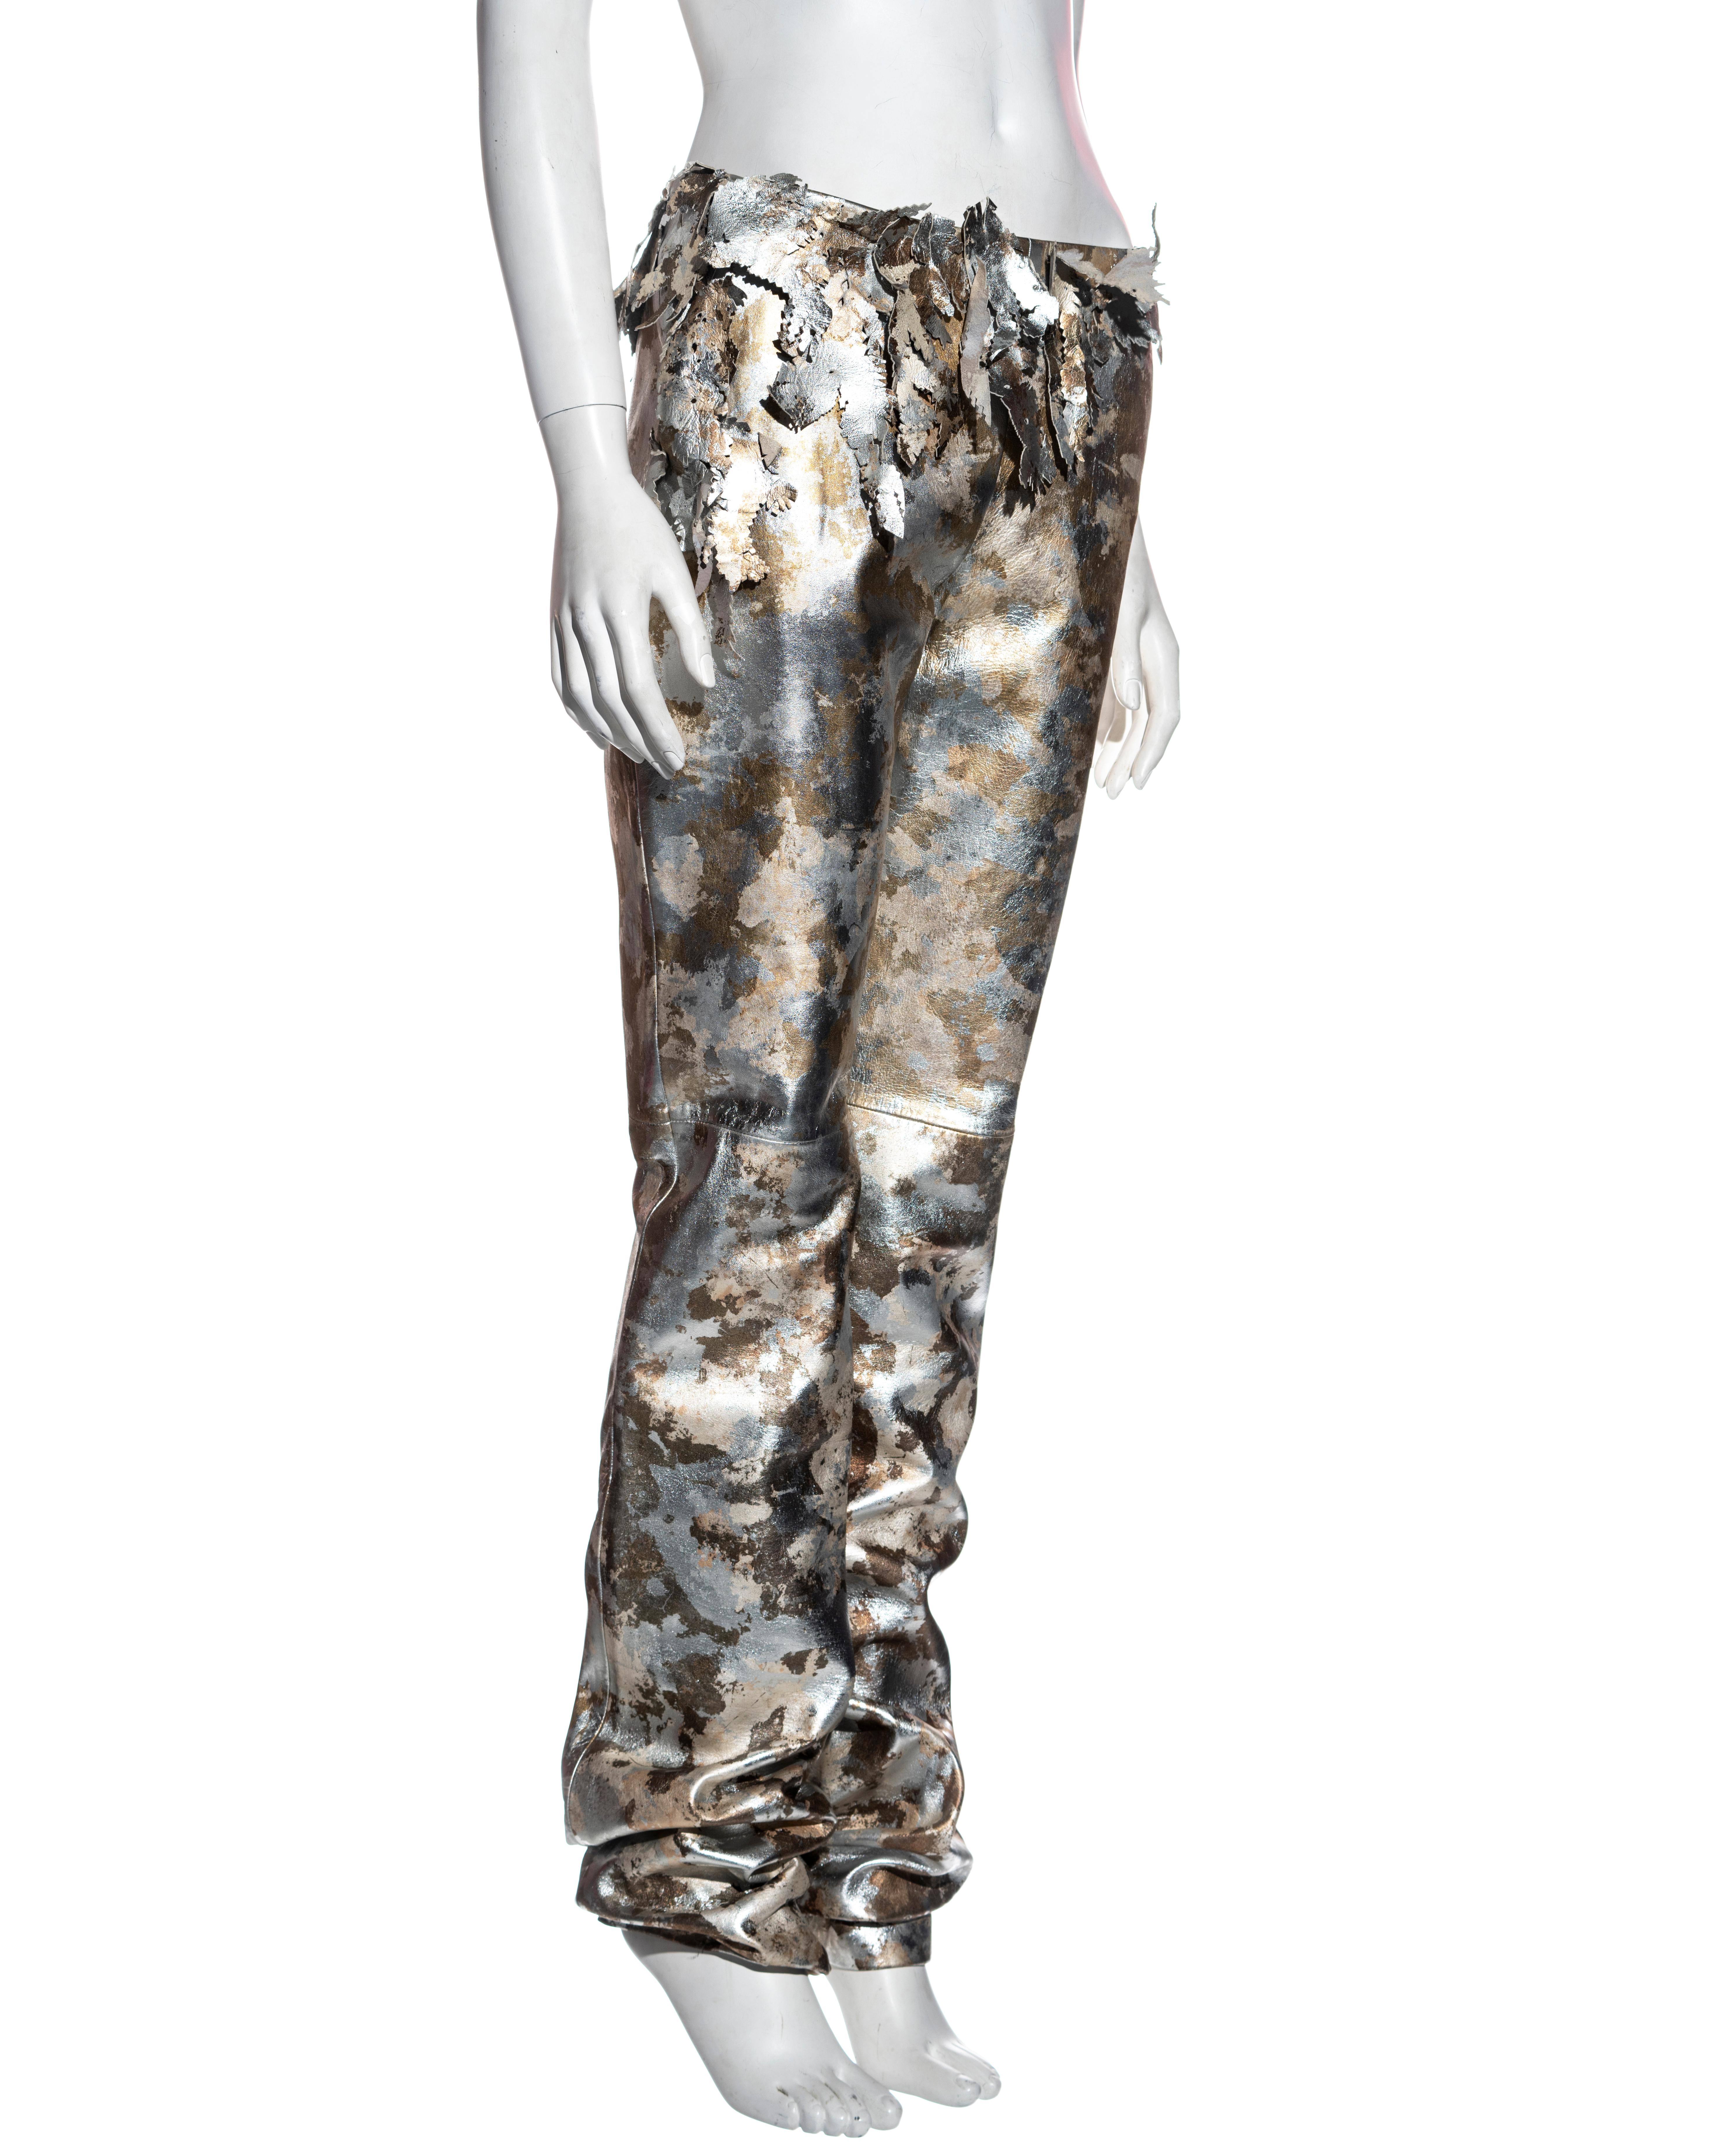 Gris Pantalon en cuir métallique Givenchy Haute Couture par Alexander McQueen, A/H 2000 en vente